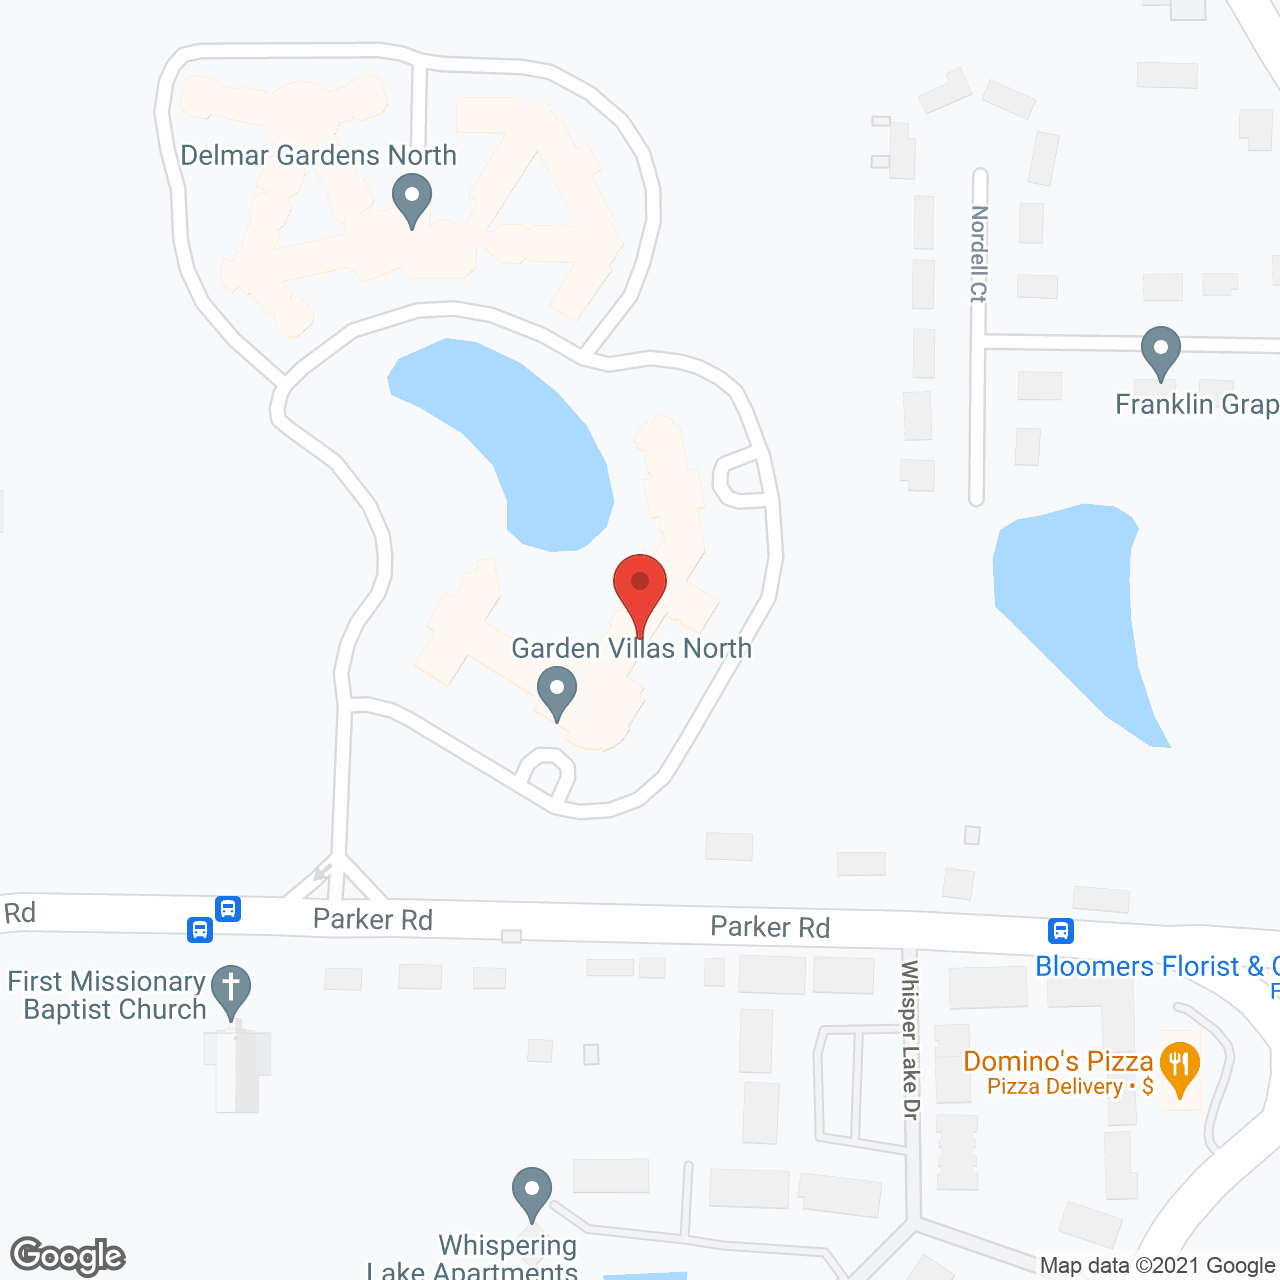 Garden Villas North in google map